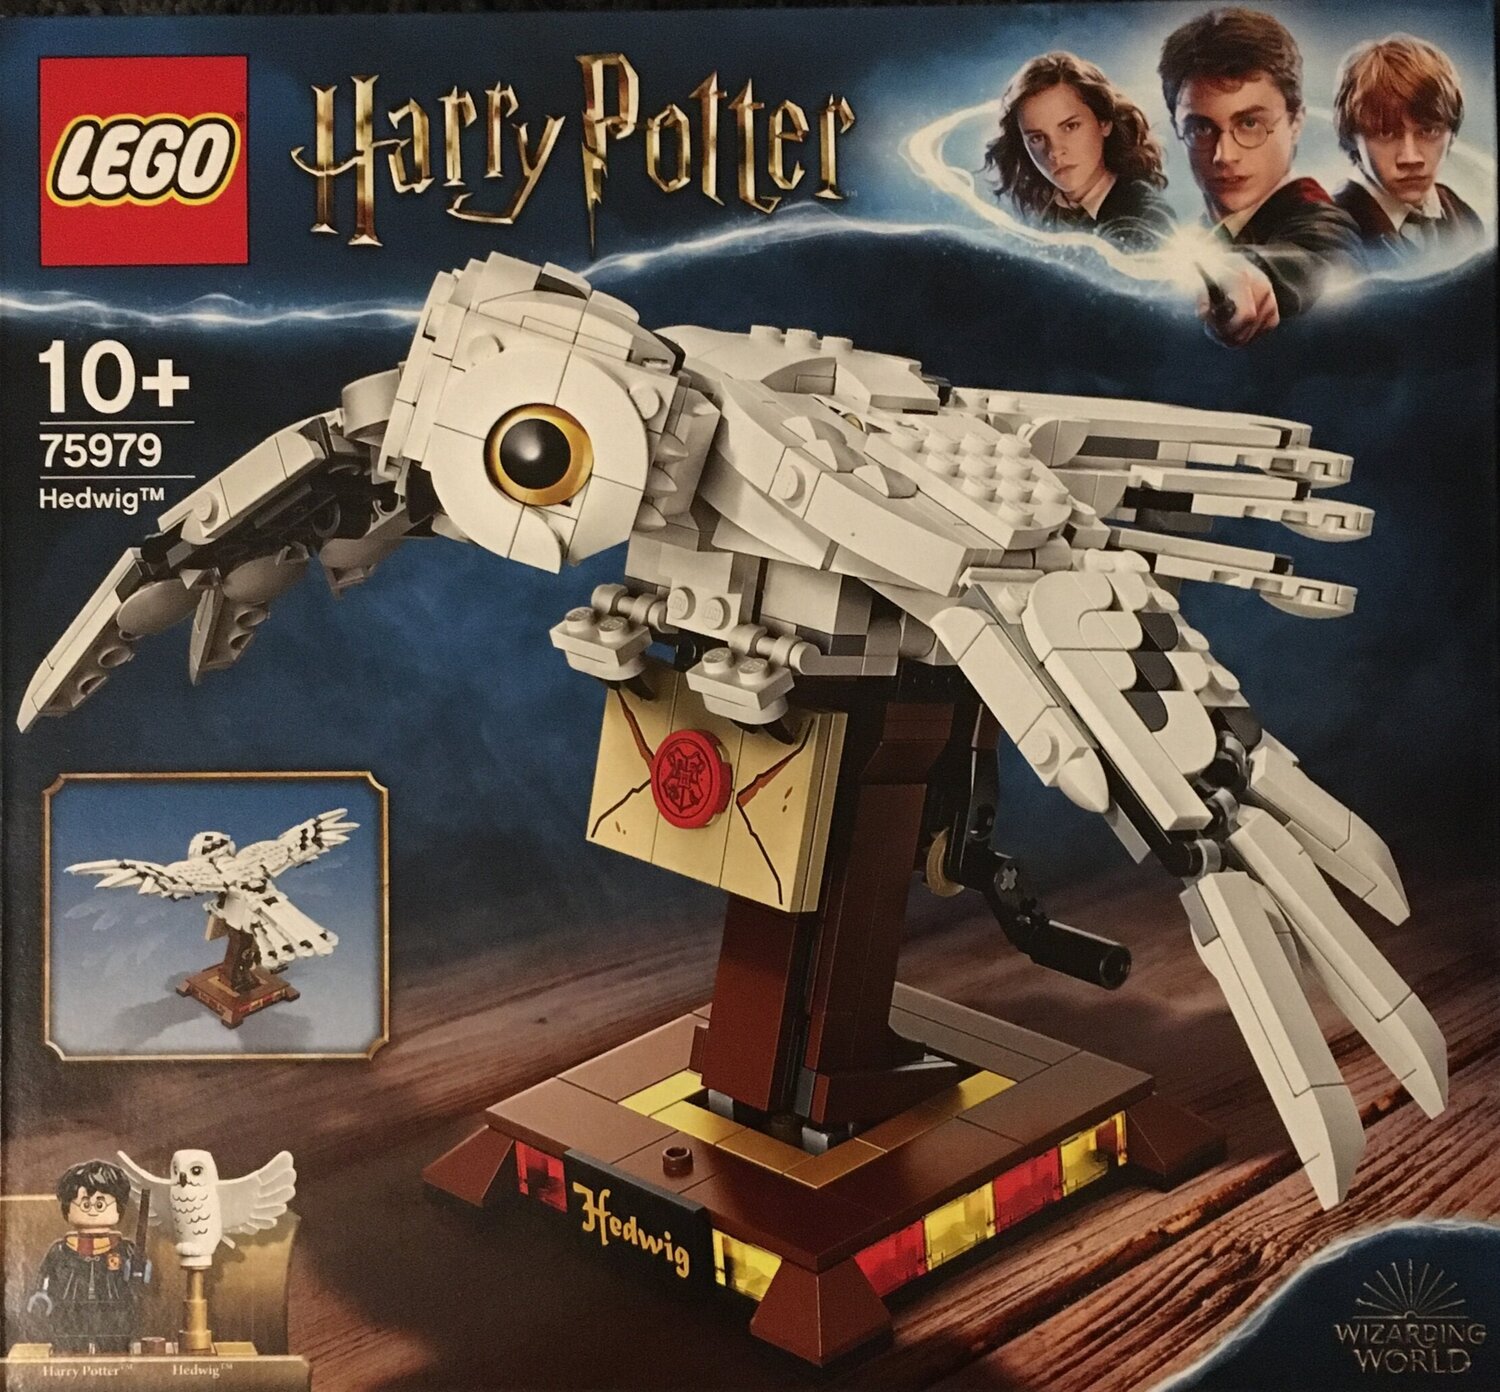 75979: LEGO Harry Potter Hedwig Set Review - BricksFanz